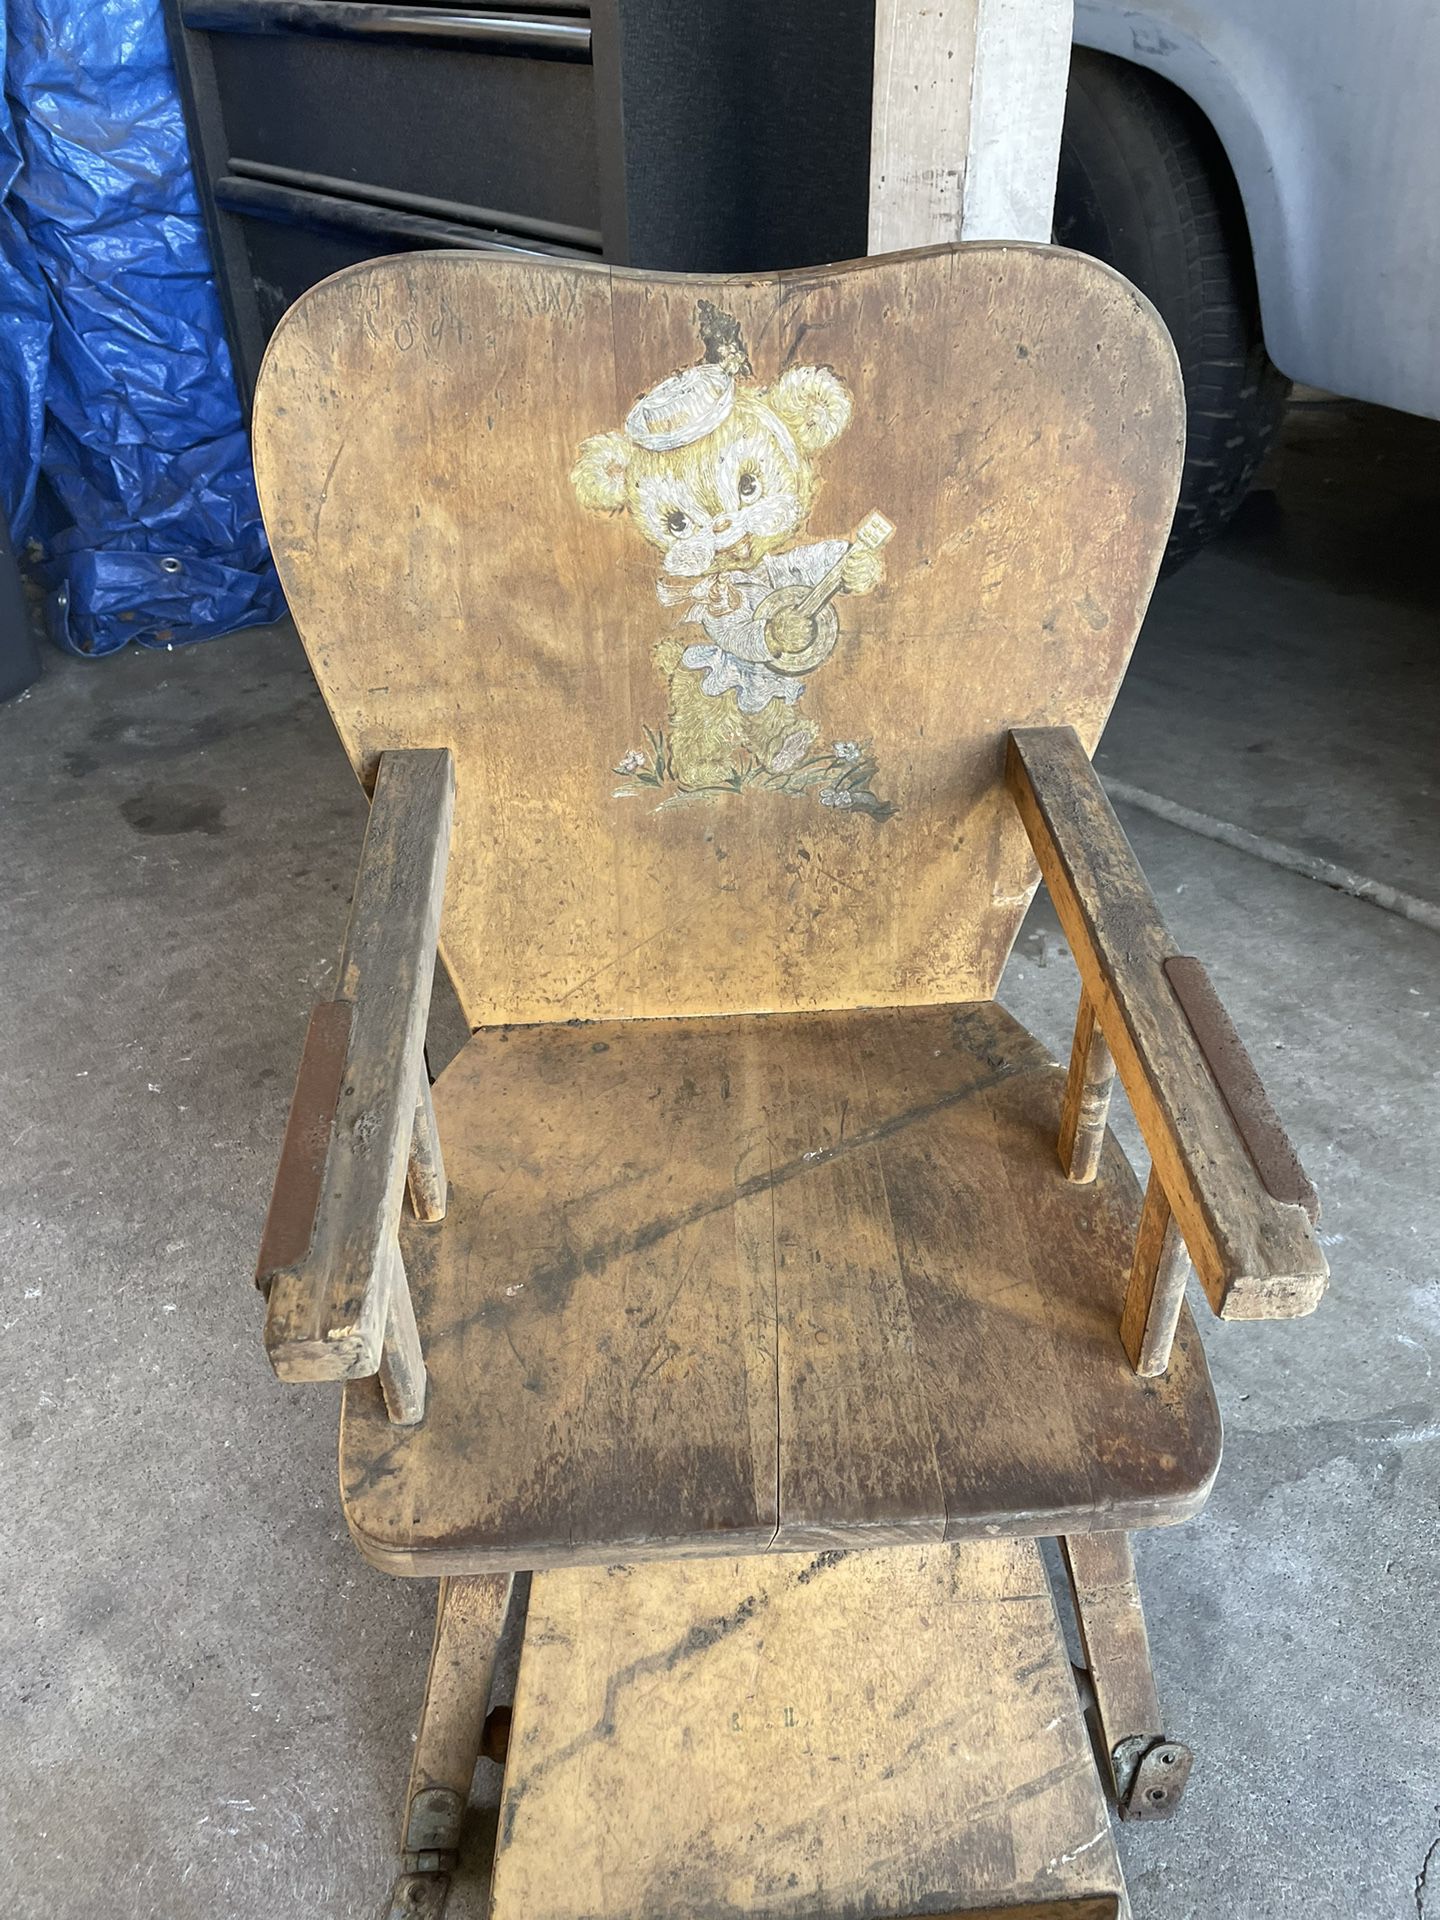 Vintage Toddler Chair